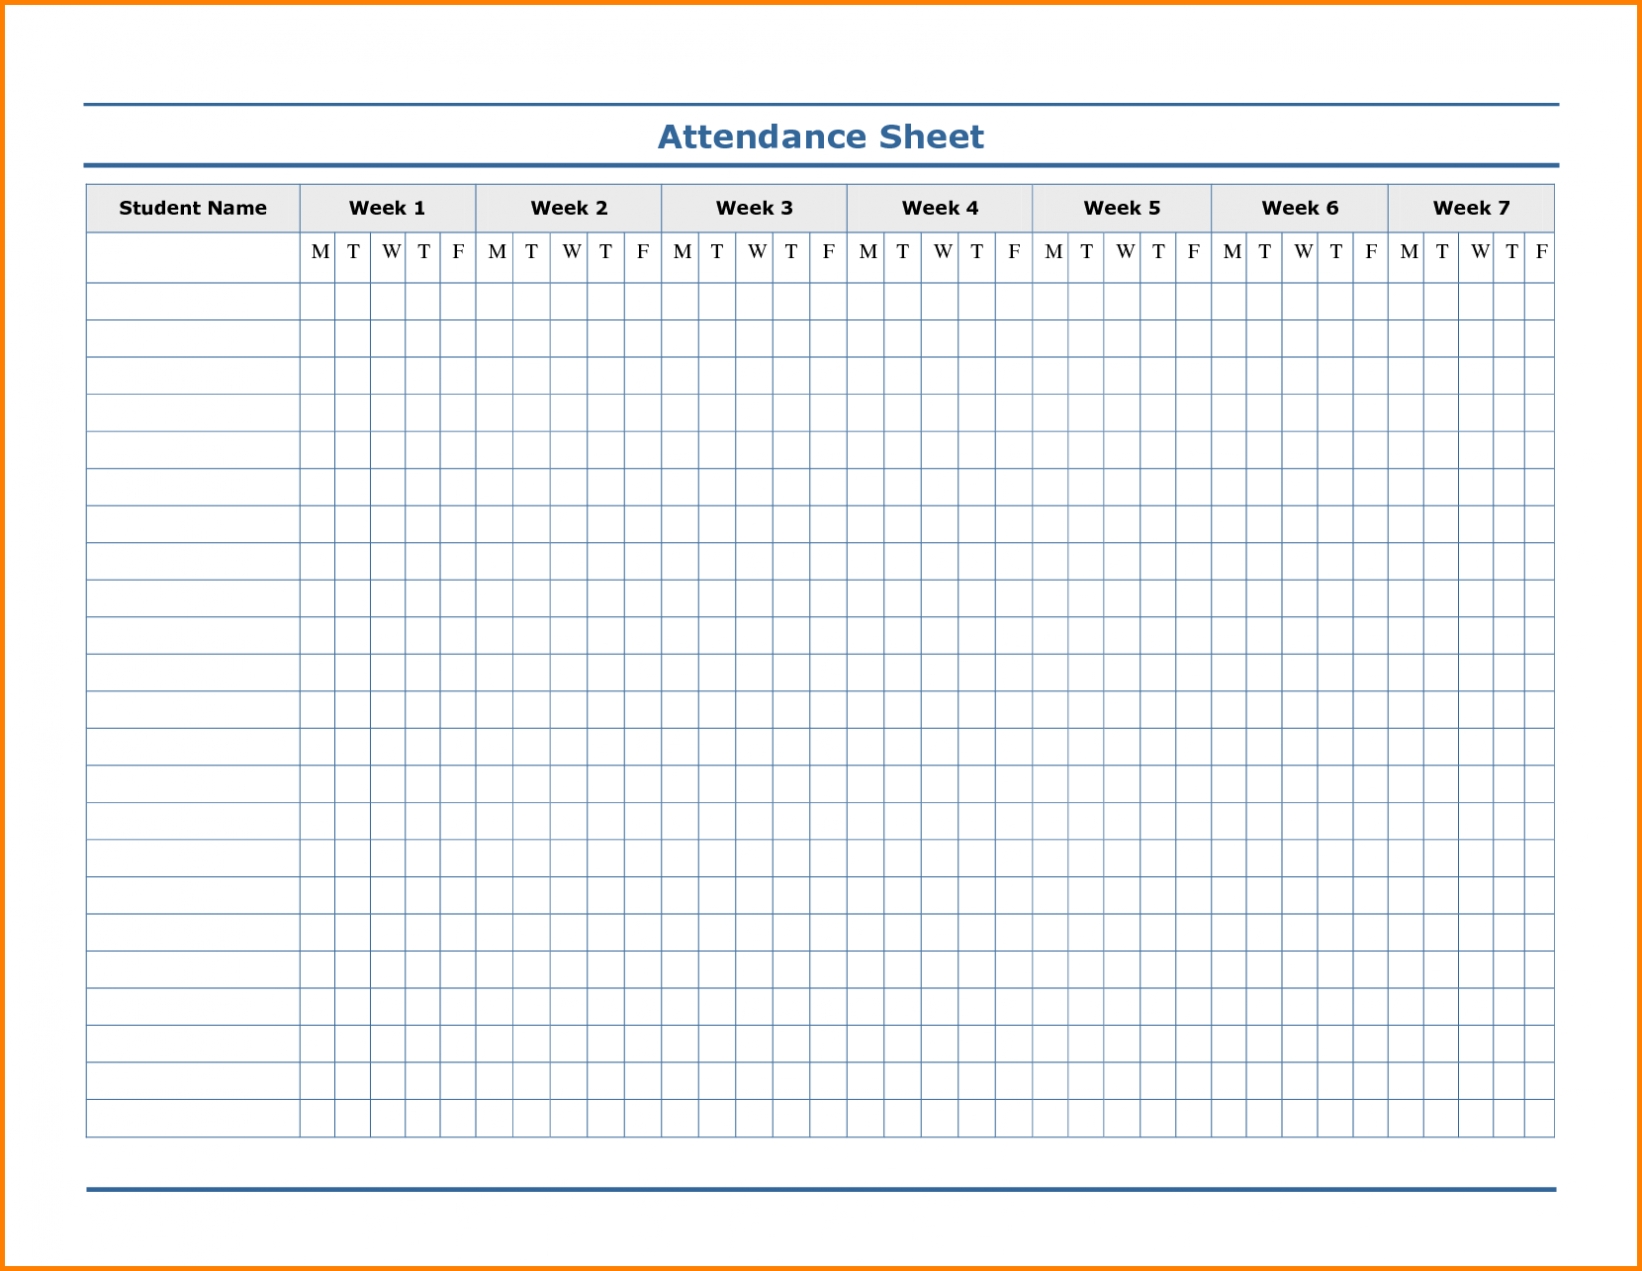 2020 Employee Attendance Calendar Templates Calendar Template Printable